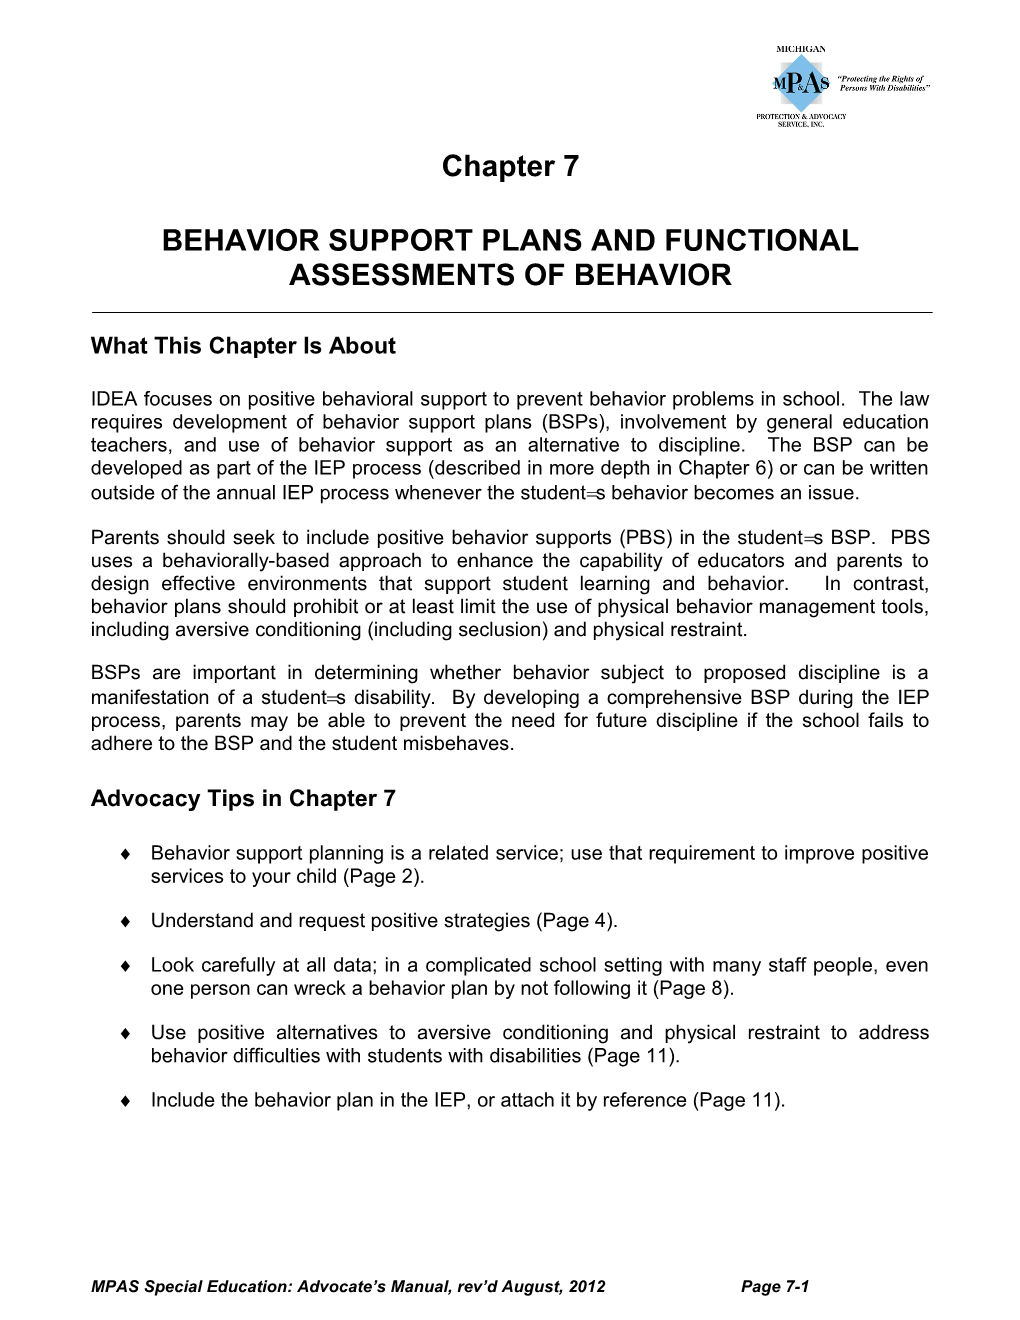 Behavior Support Plans and Functional Assessments of Behavior